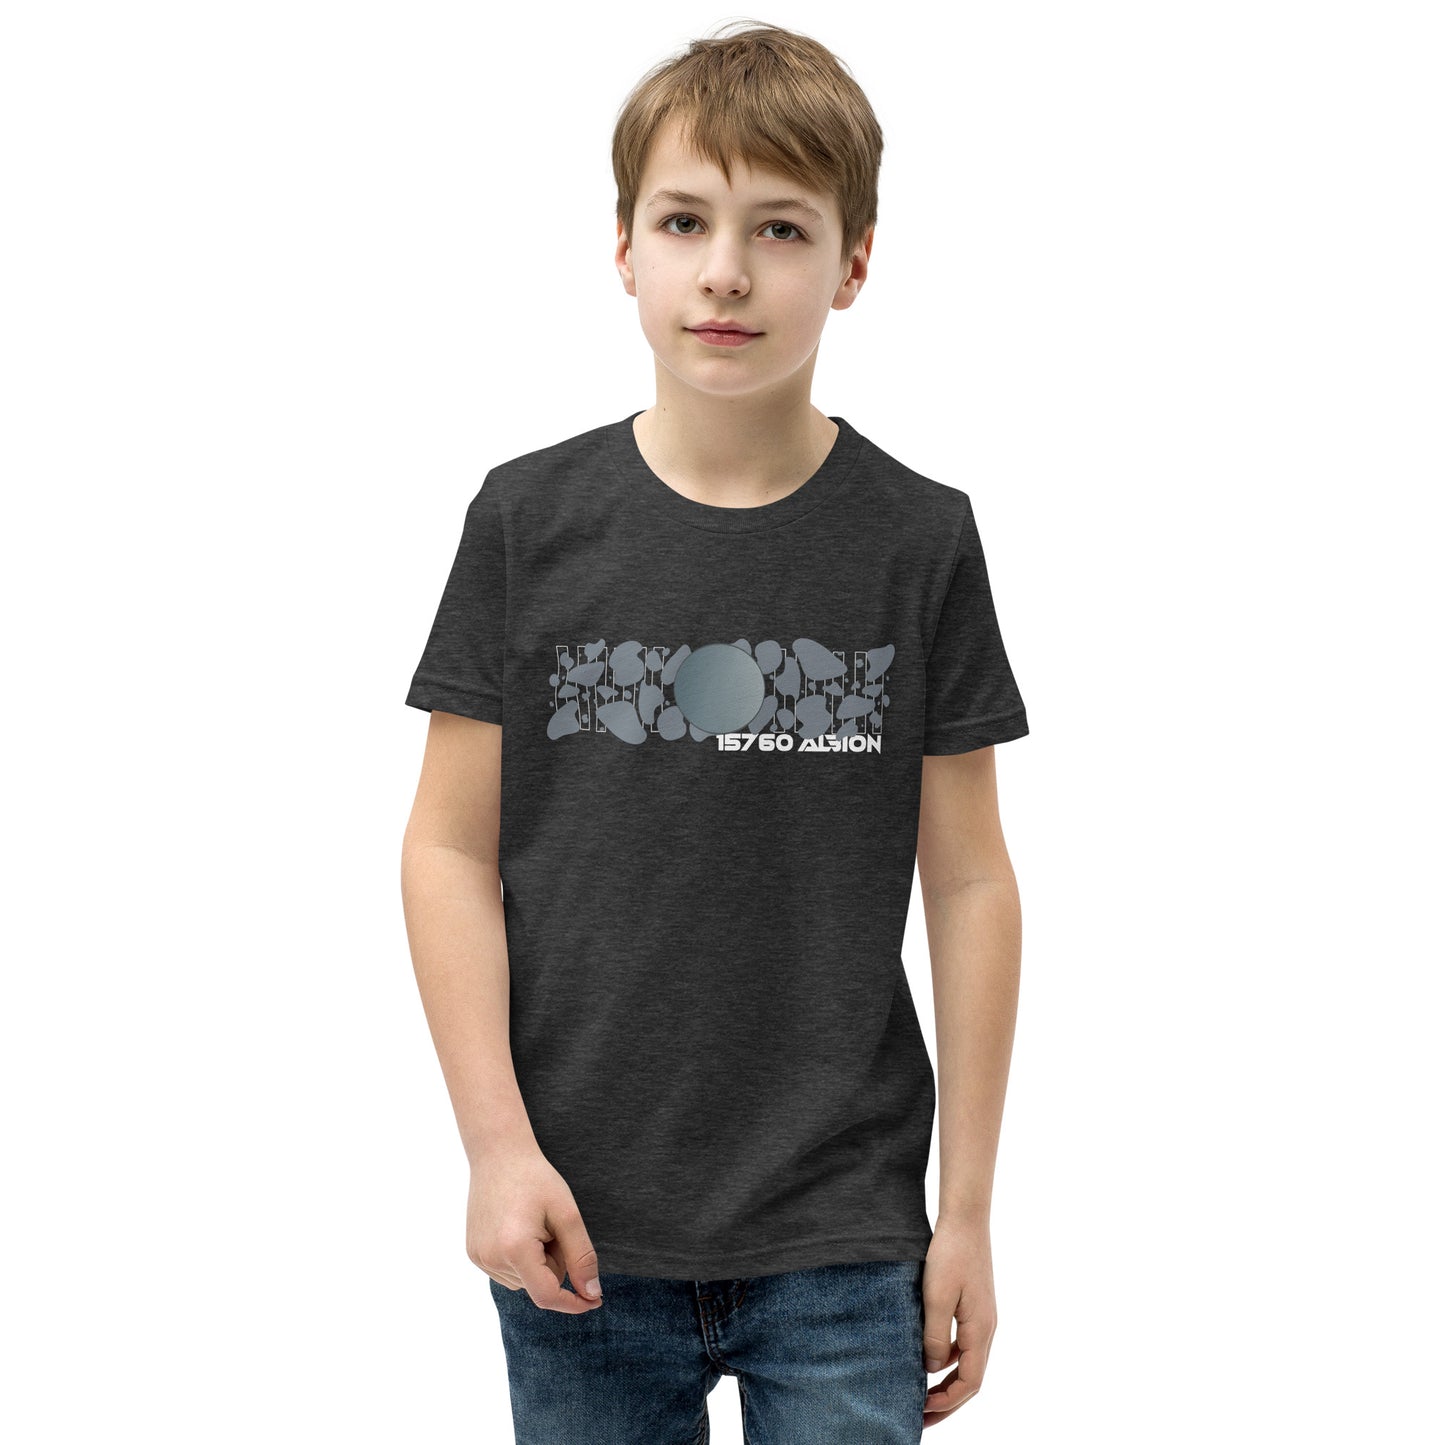 15760 Albion dark Youth Short Sleeve T-Shirt